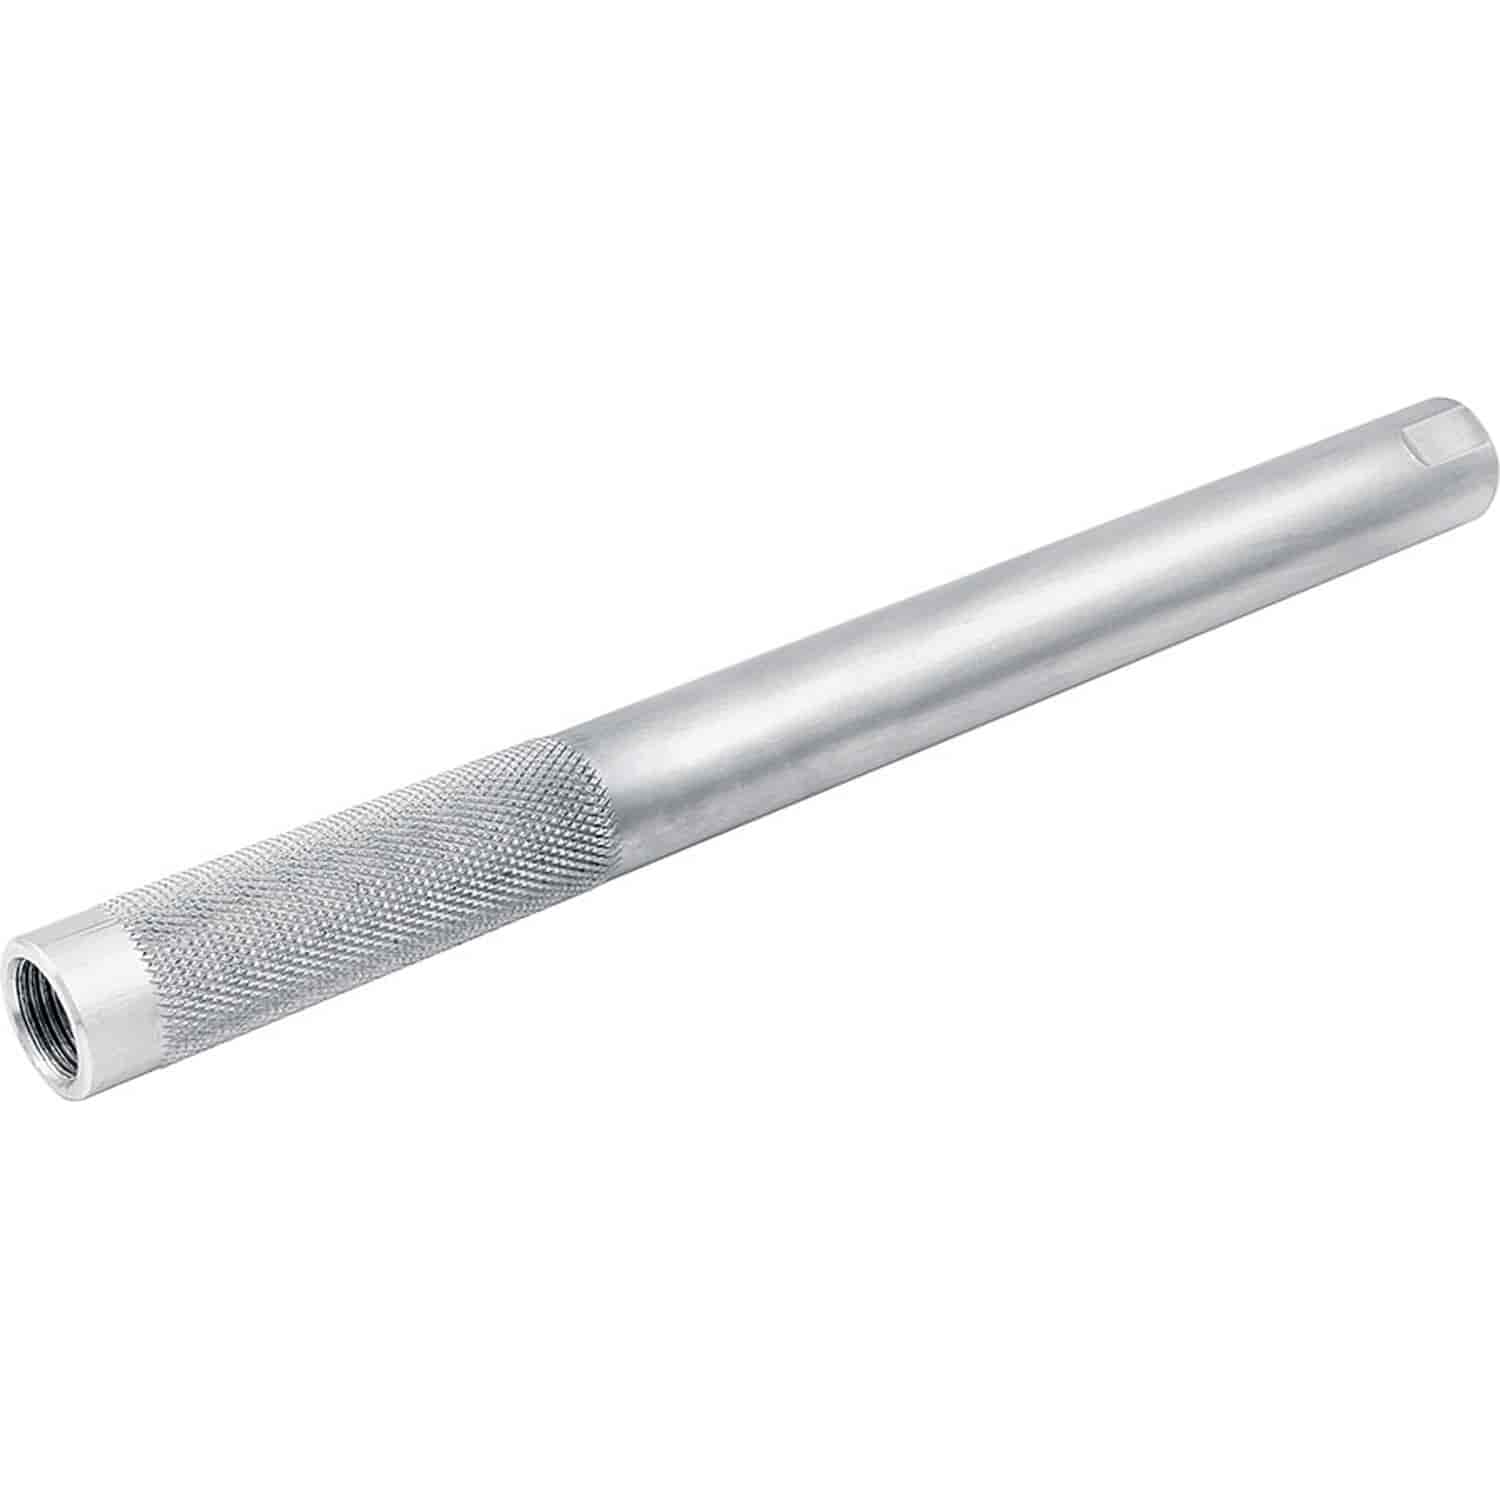 Swedged Aluminum Tie Rod Tube Length: 15"